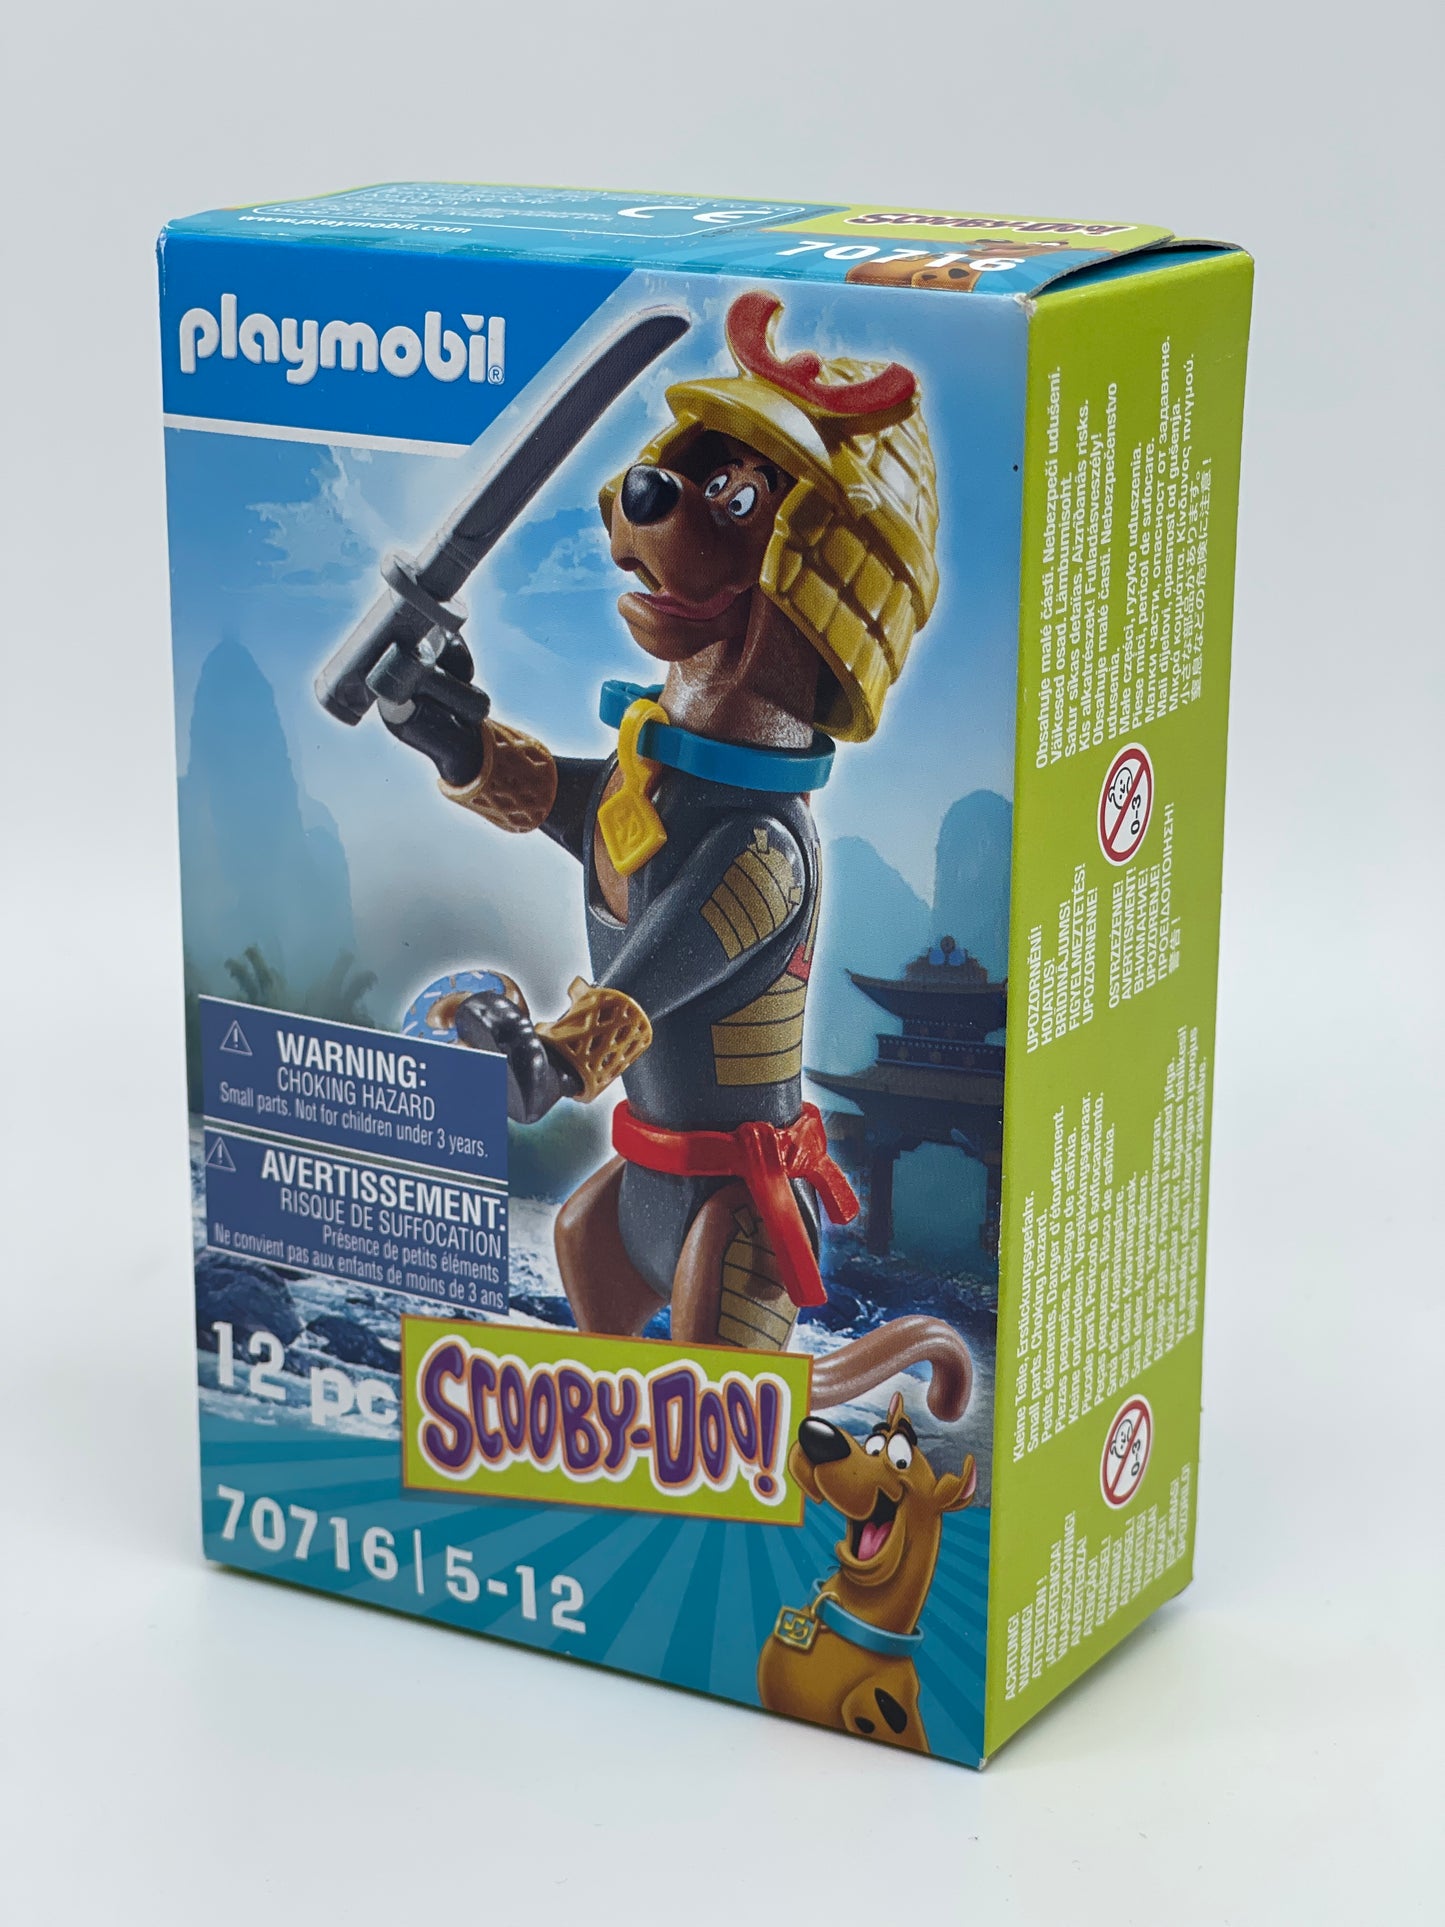 Playmobil "Samurai" Scooby Doo mit Zubehör 70716 (2021)